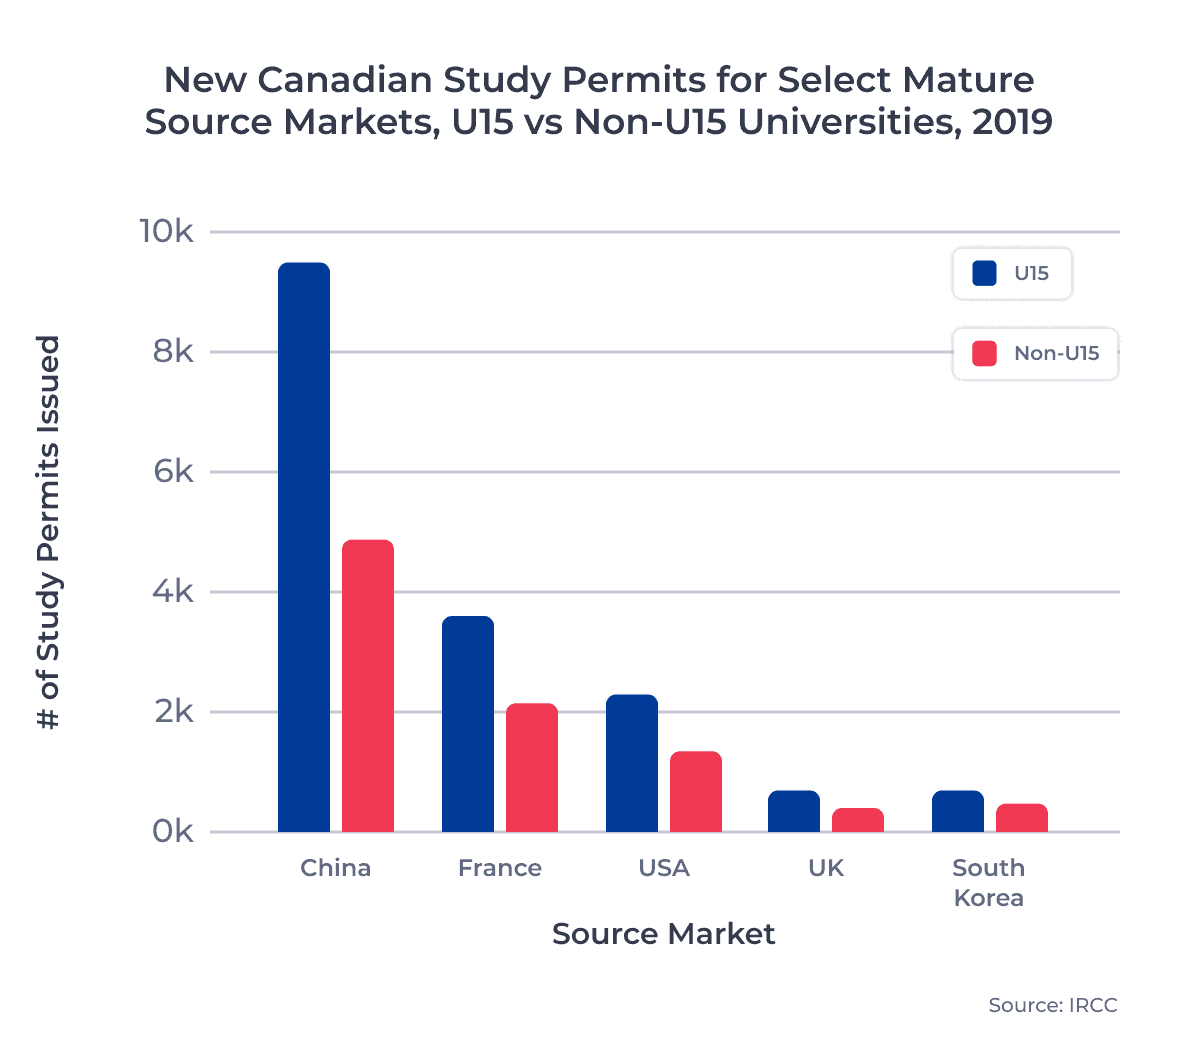 New Canadian Study Permits for Select Mature Source Markets, U15 vs Non-U15 Universities, 2019